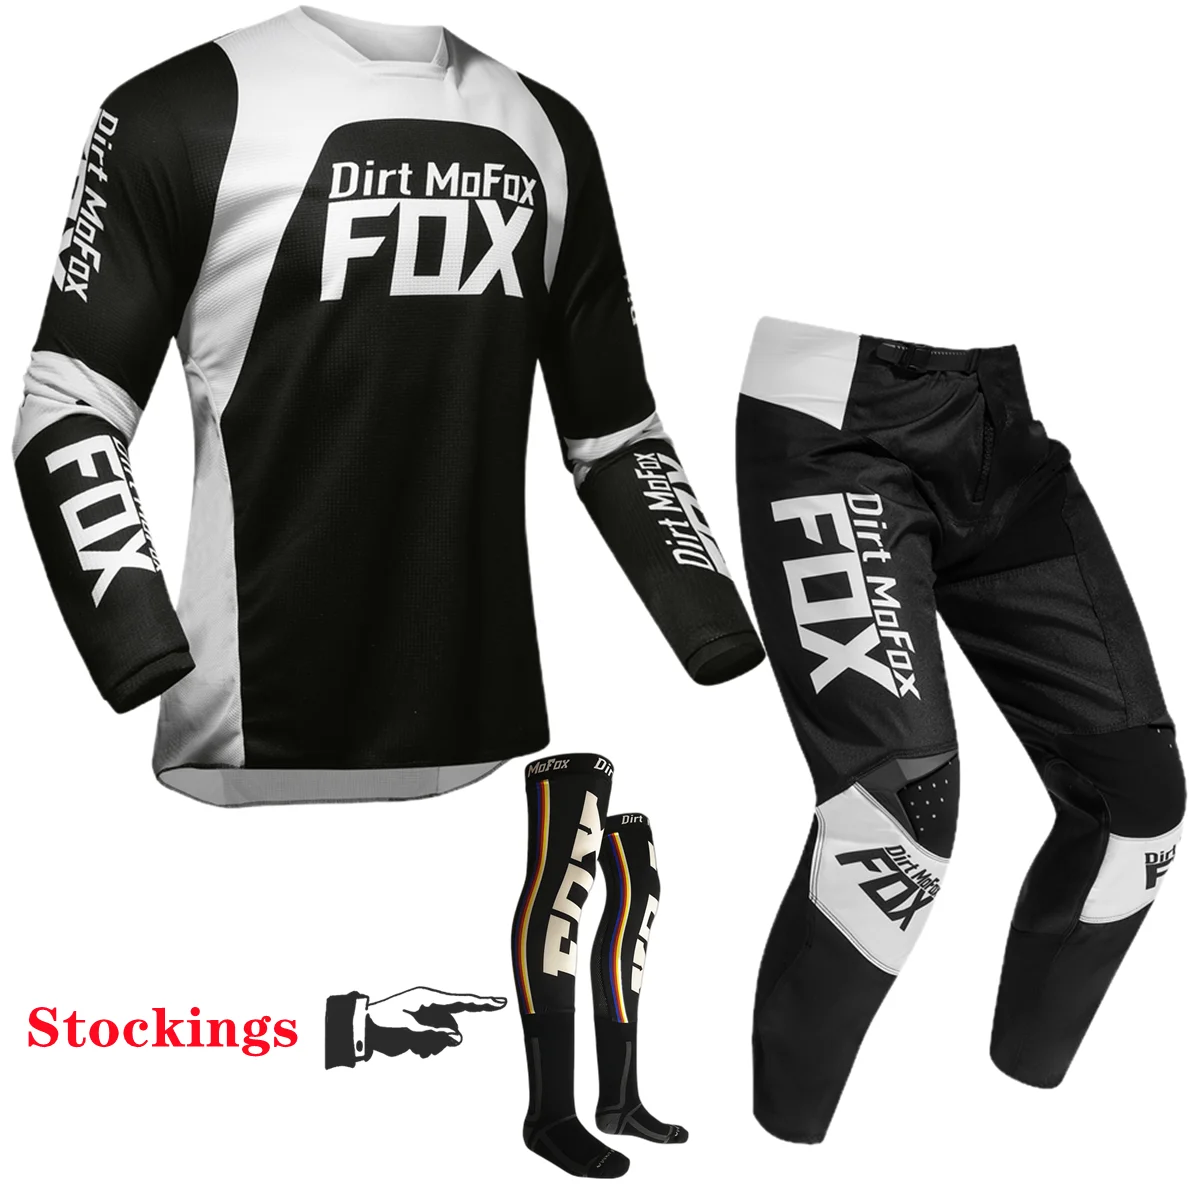 2022 NEW Dirt MoFox Moto Gear Set Jersey Pant MX Combo Motocross Racing Outfit Dirt Bike Suit Off Road Socks CombinationKit